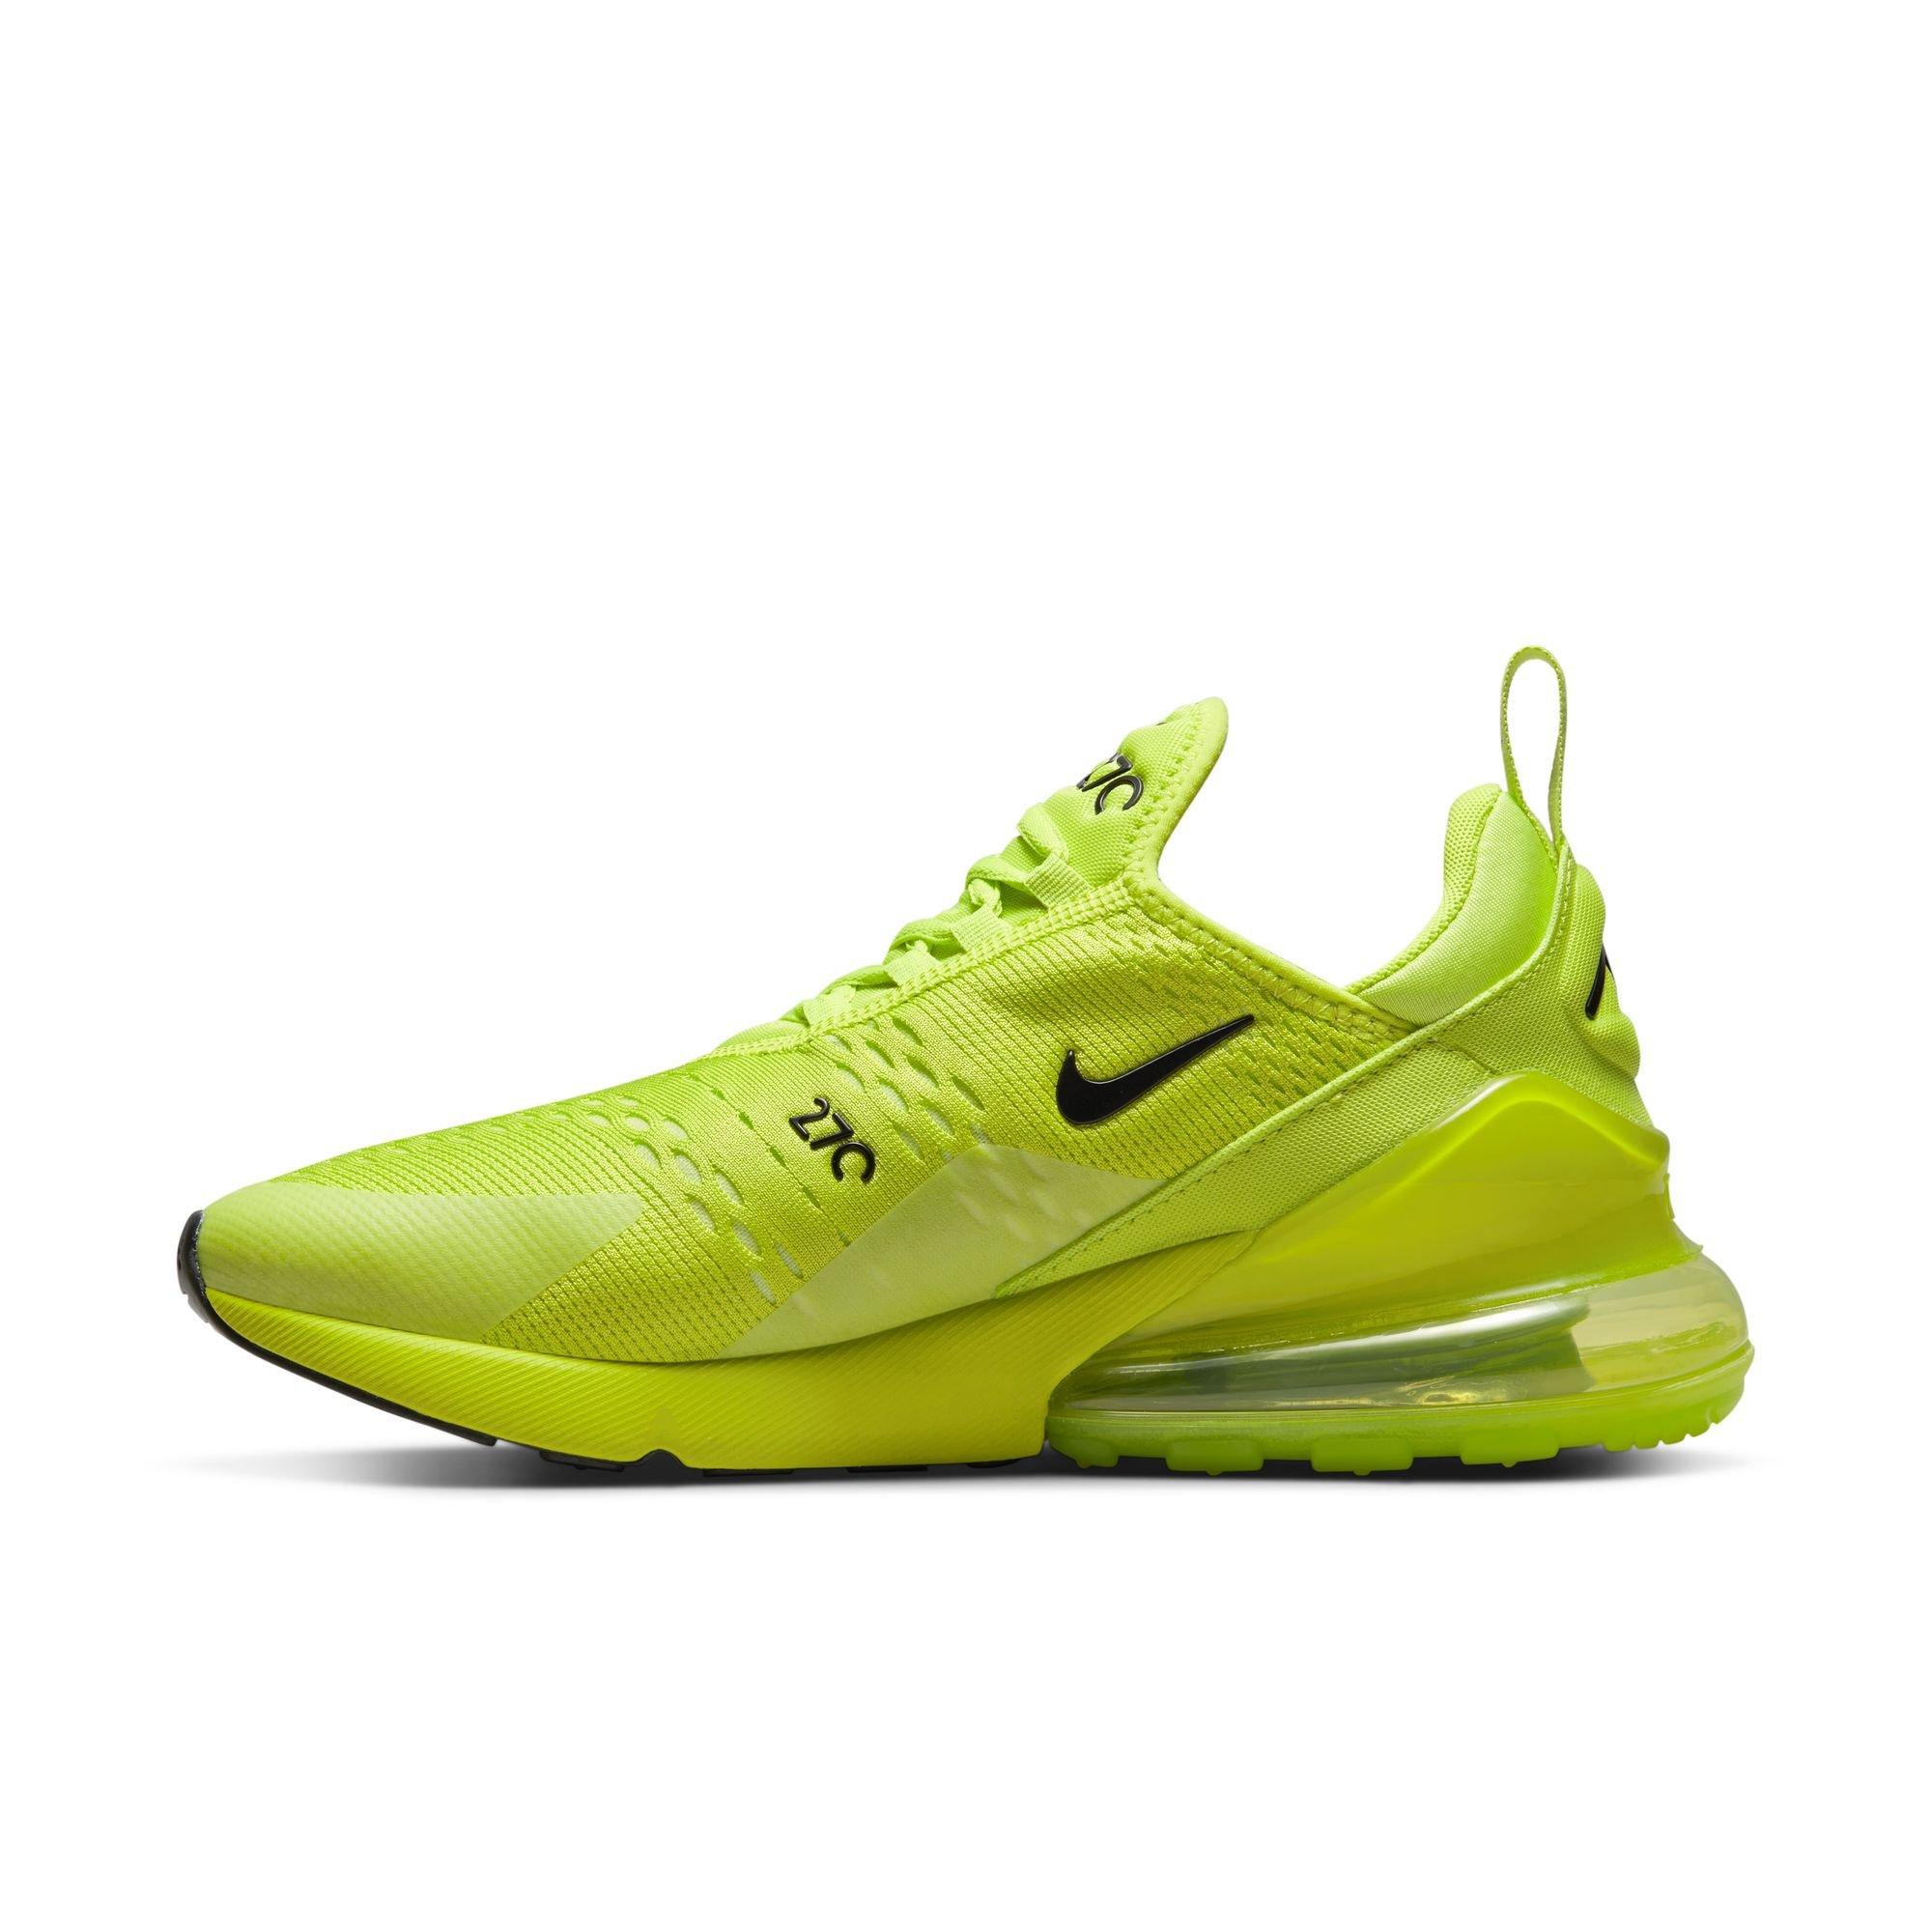 Nike Air Max "Atomic Green/Black/Lt Lemon Twist" Women's Shoe